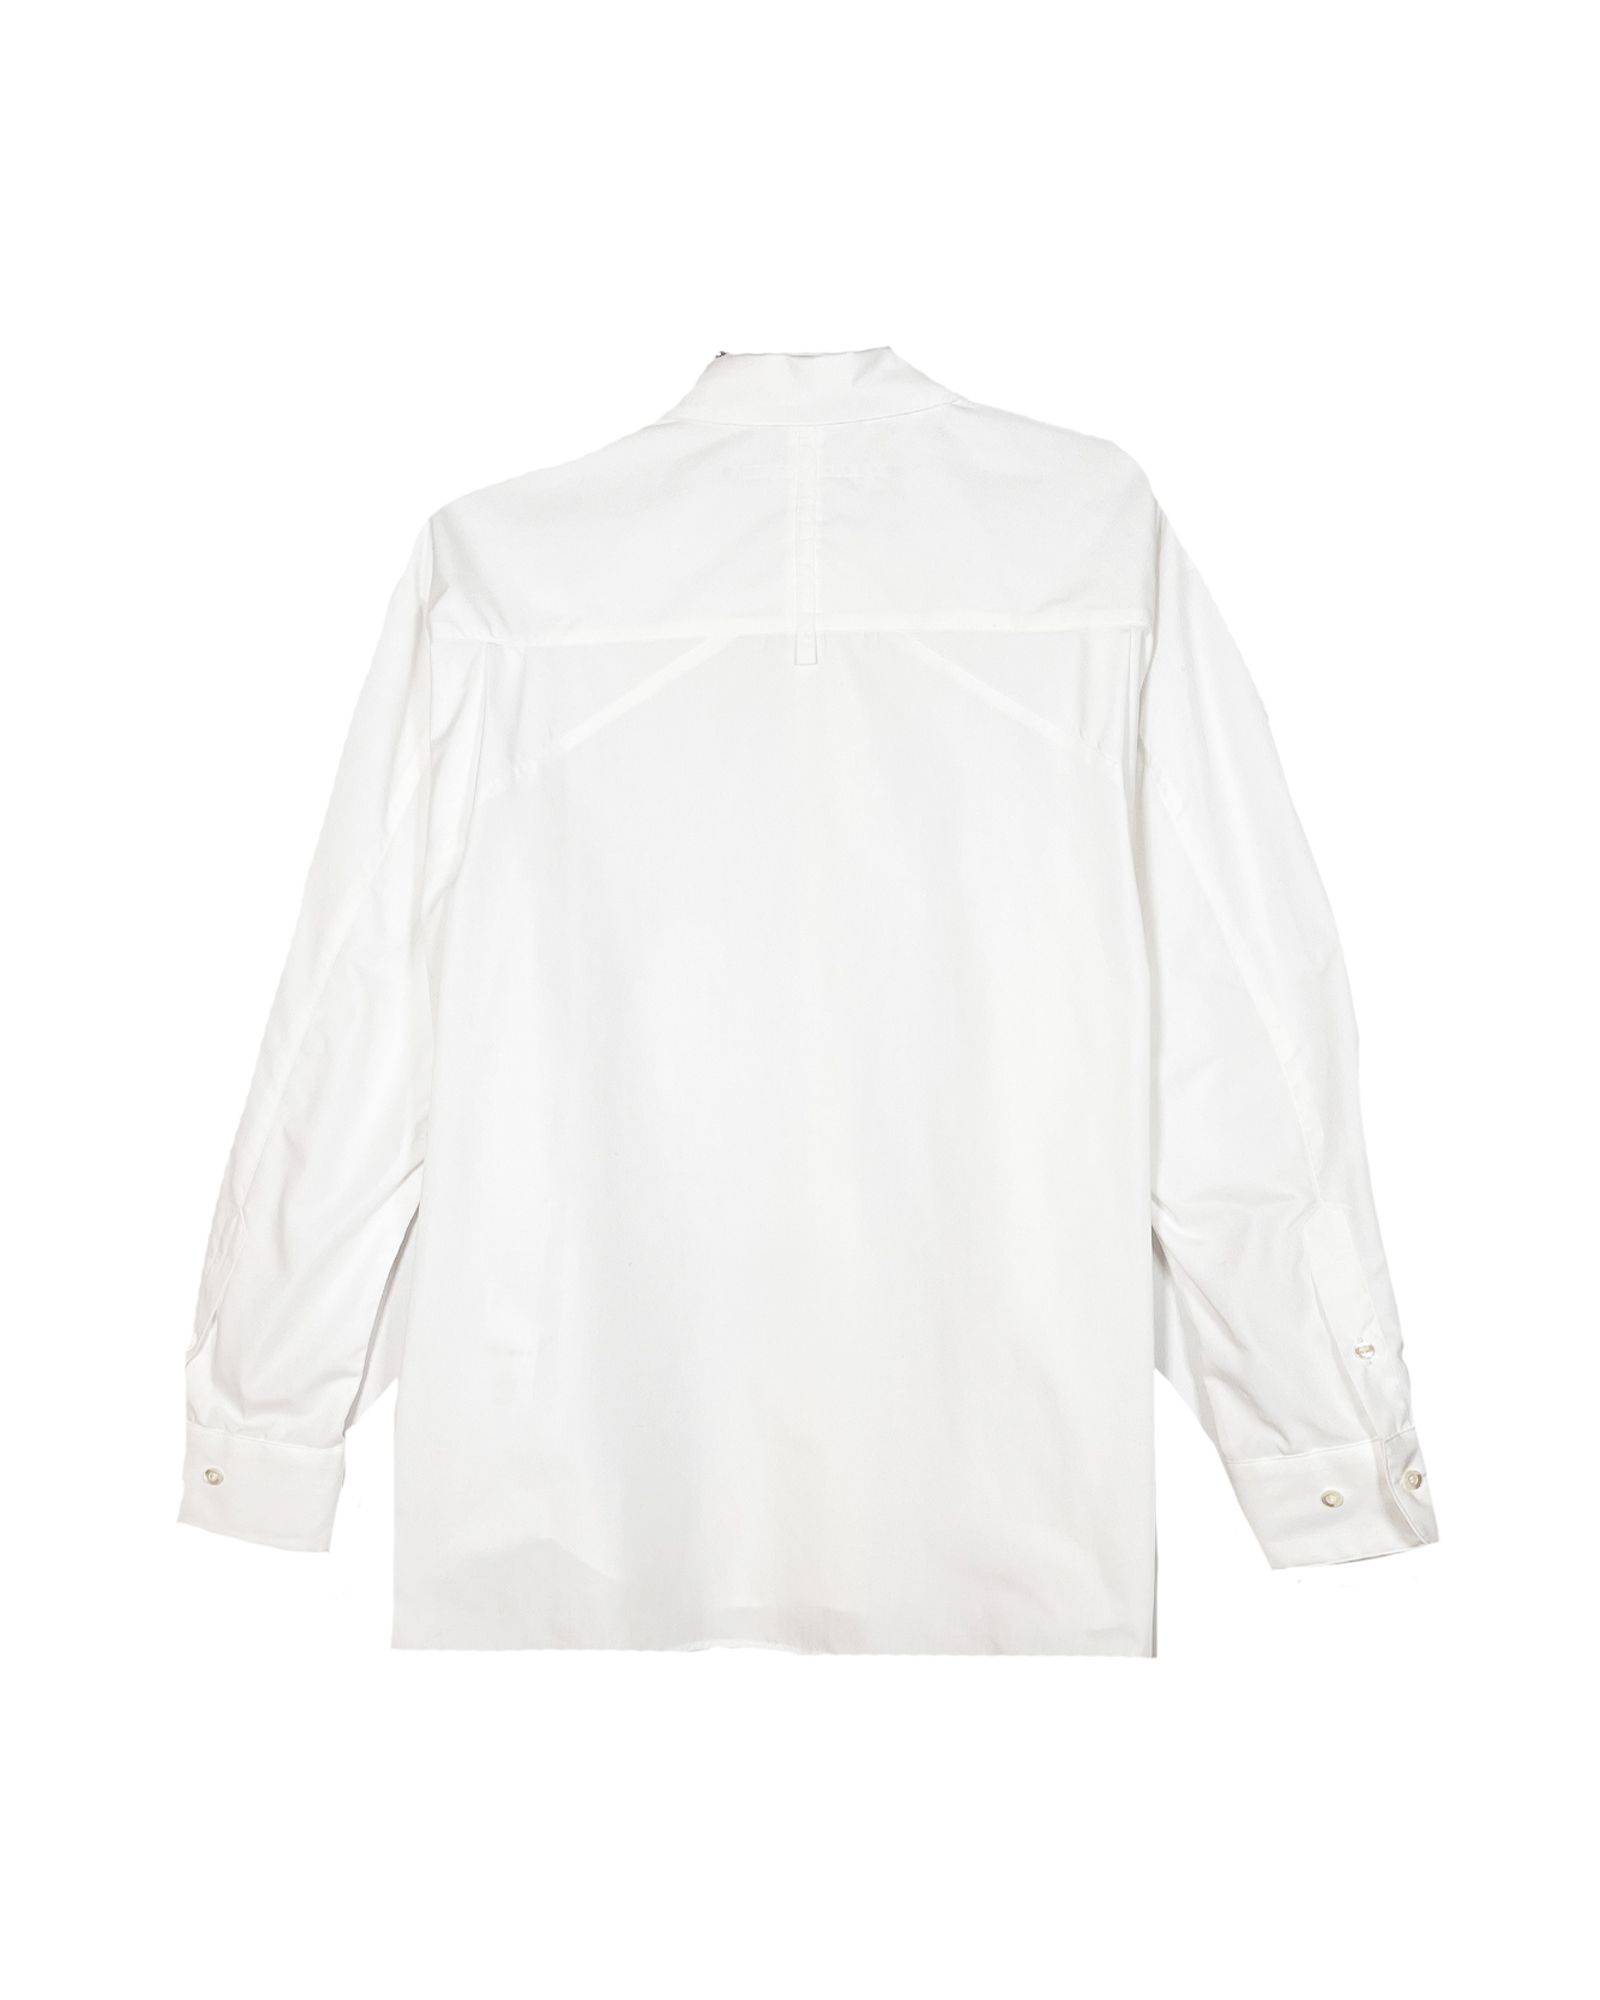 Tamme - タム/∠13° TACTICAL SHIRT/シャツ/White | Detail